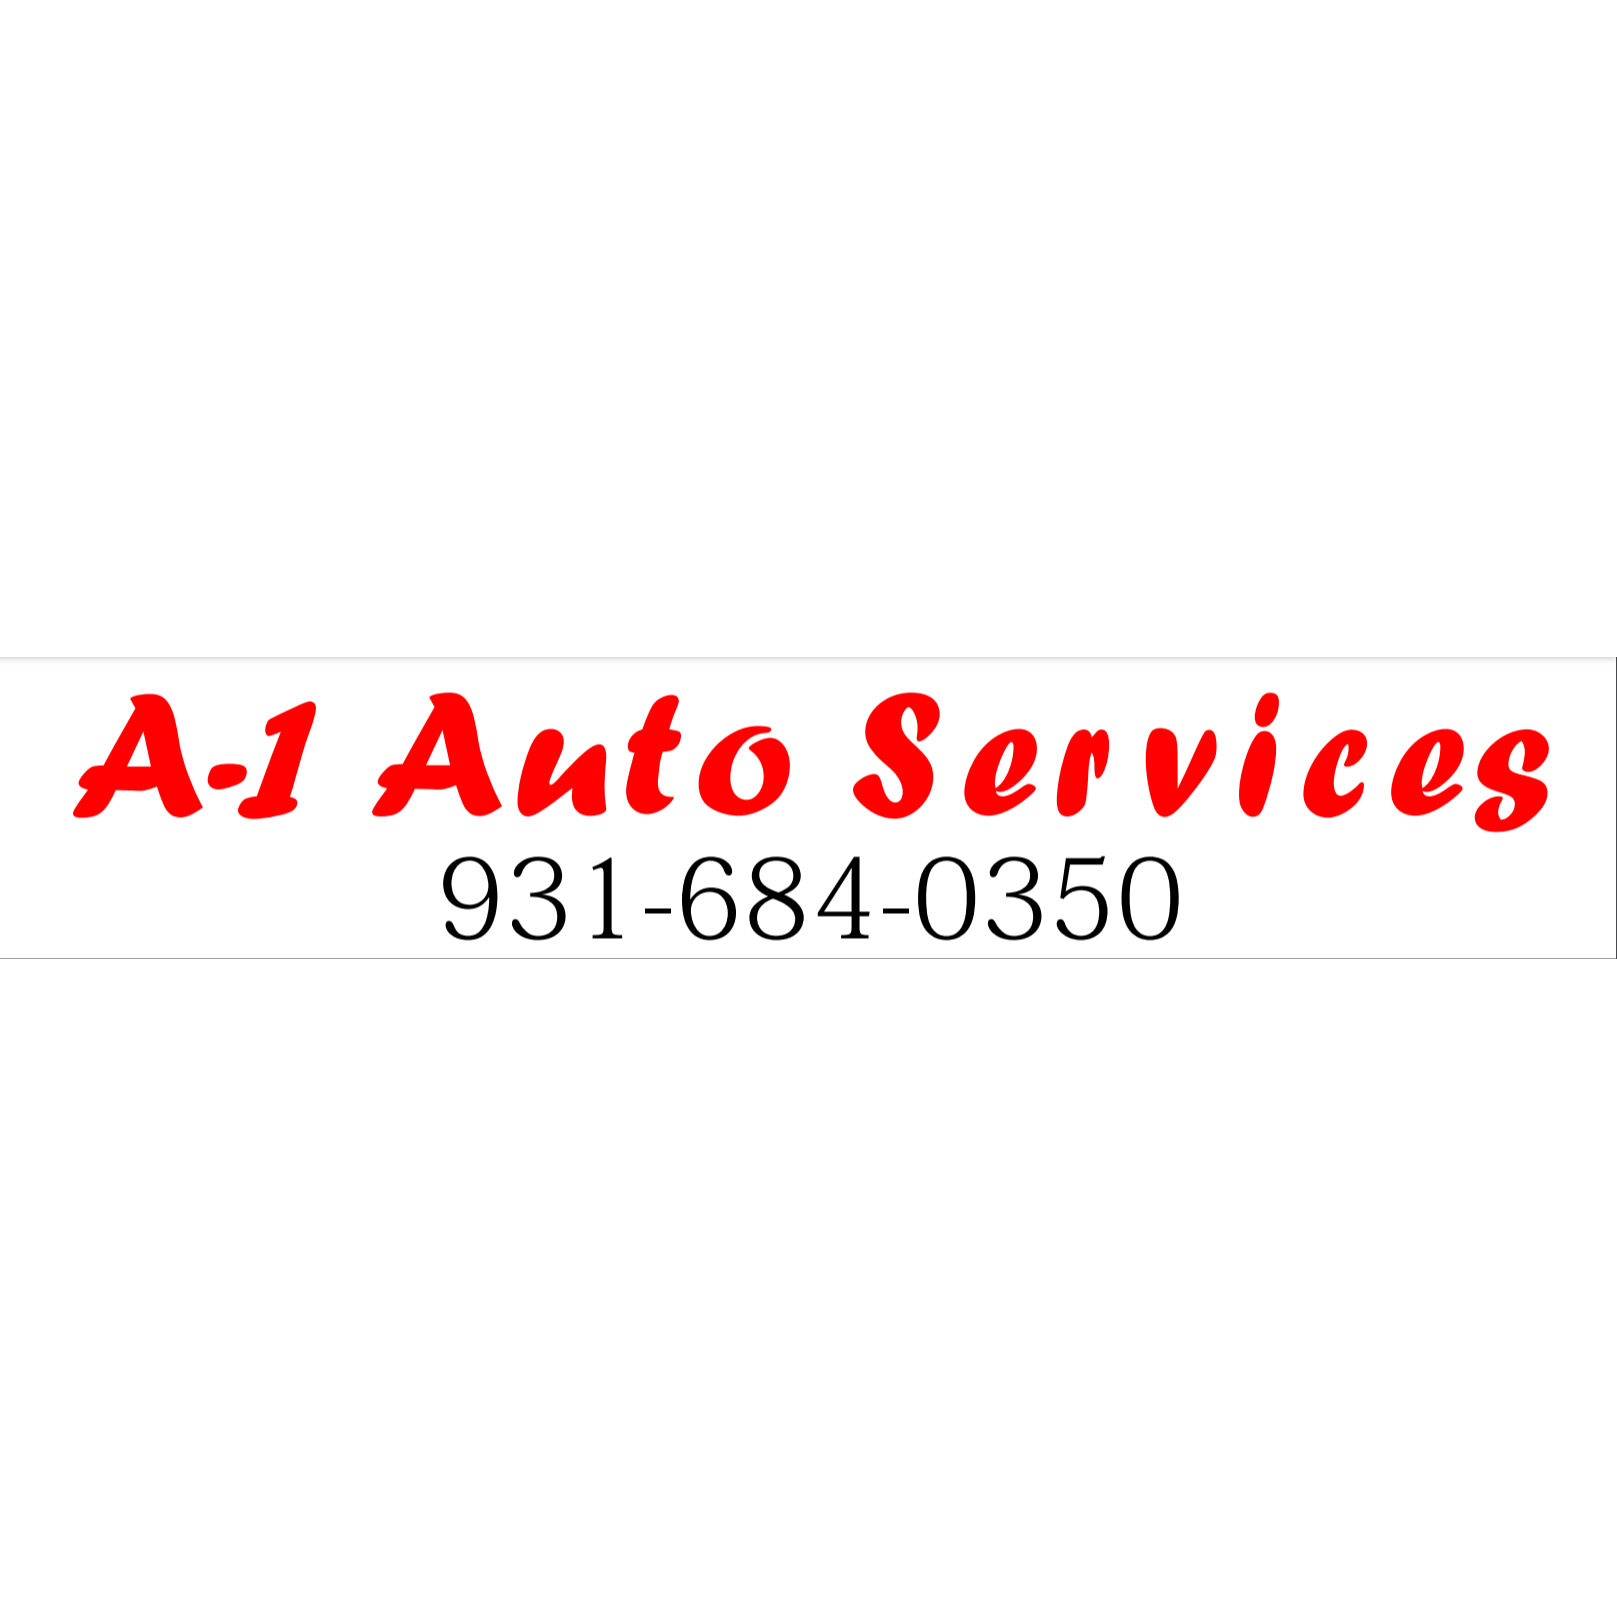 A-1 Auto Services